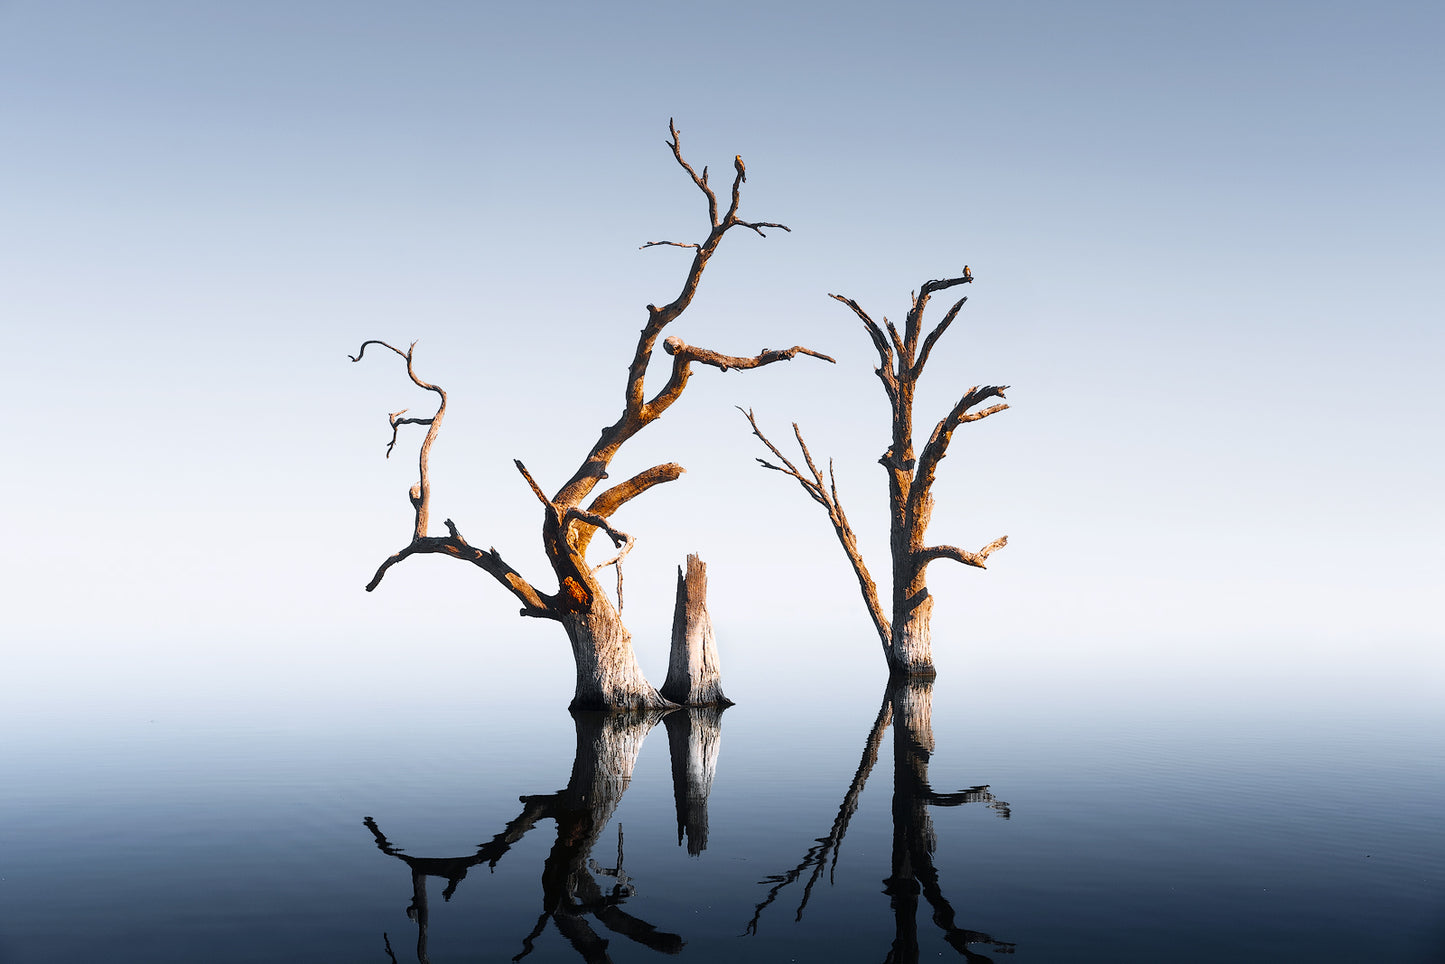 Dead trees at Lake Bonney, South Australia